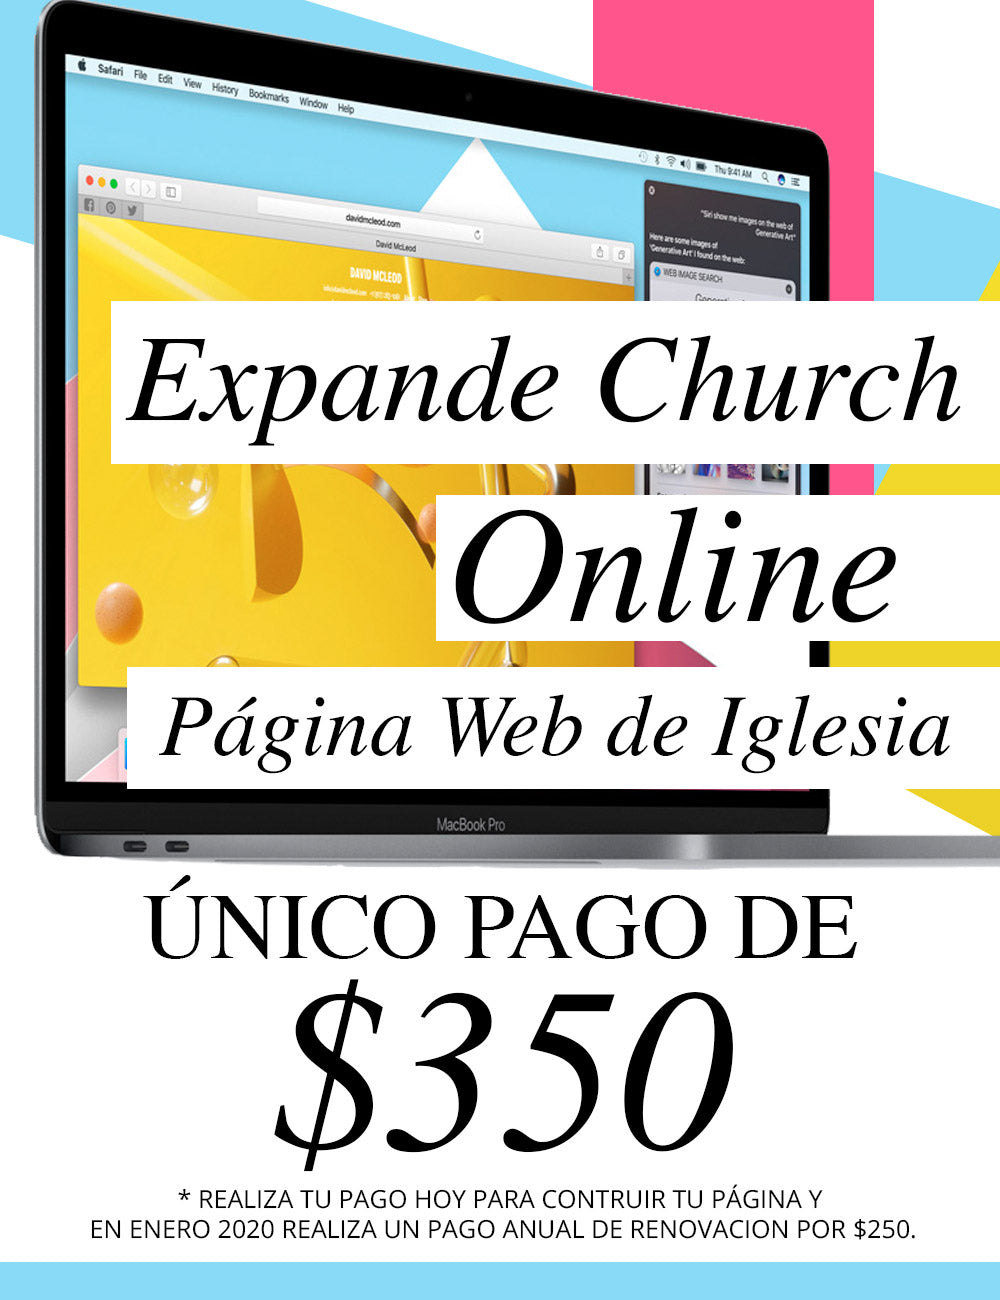 Expande Church Online - 1 Página web de iglesia